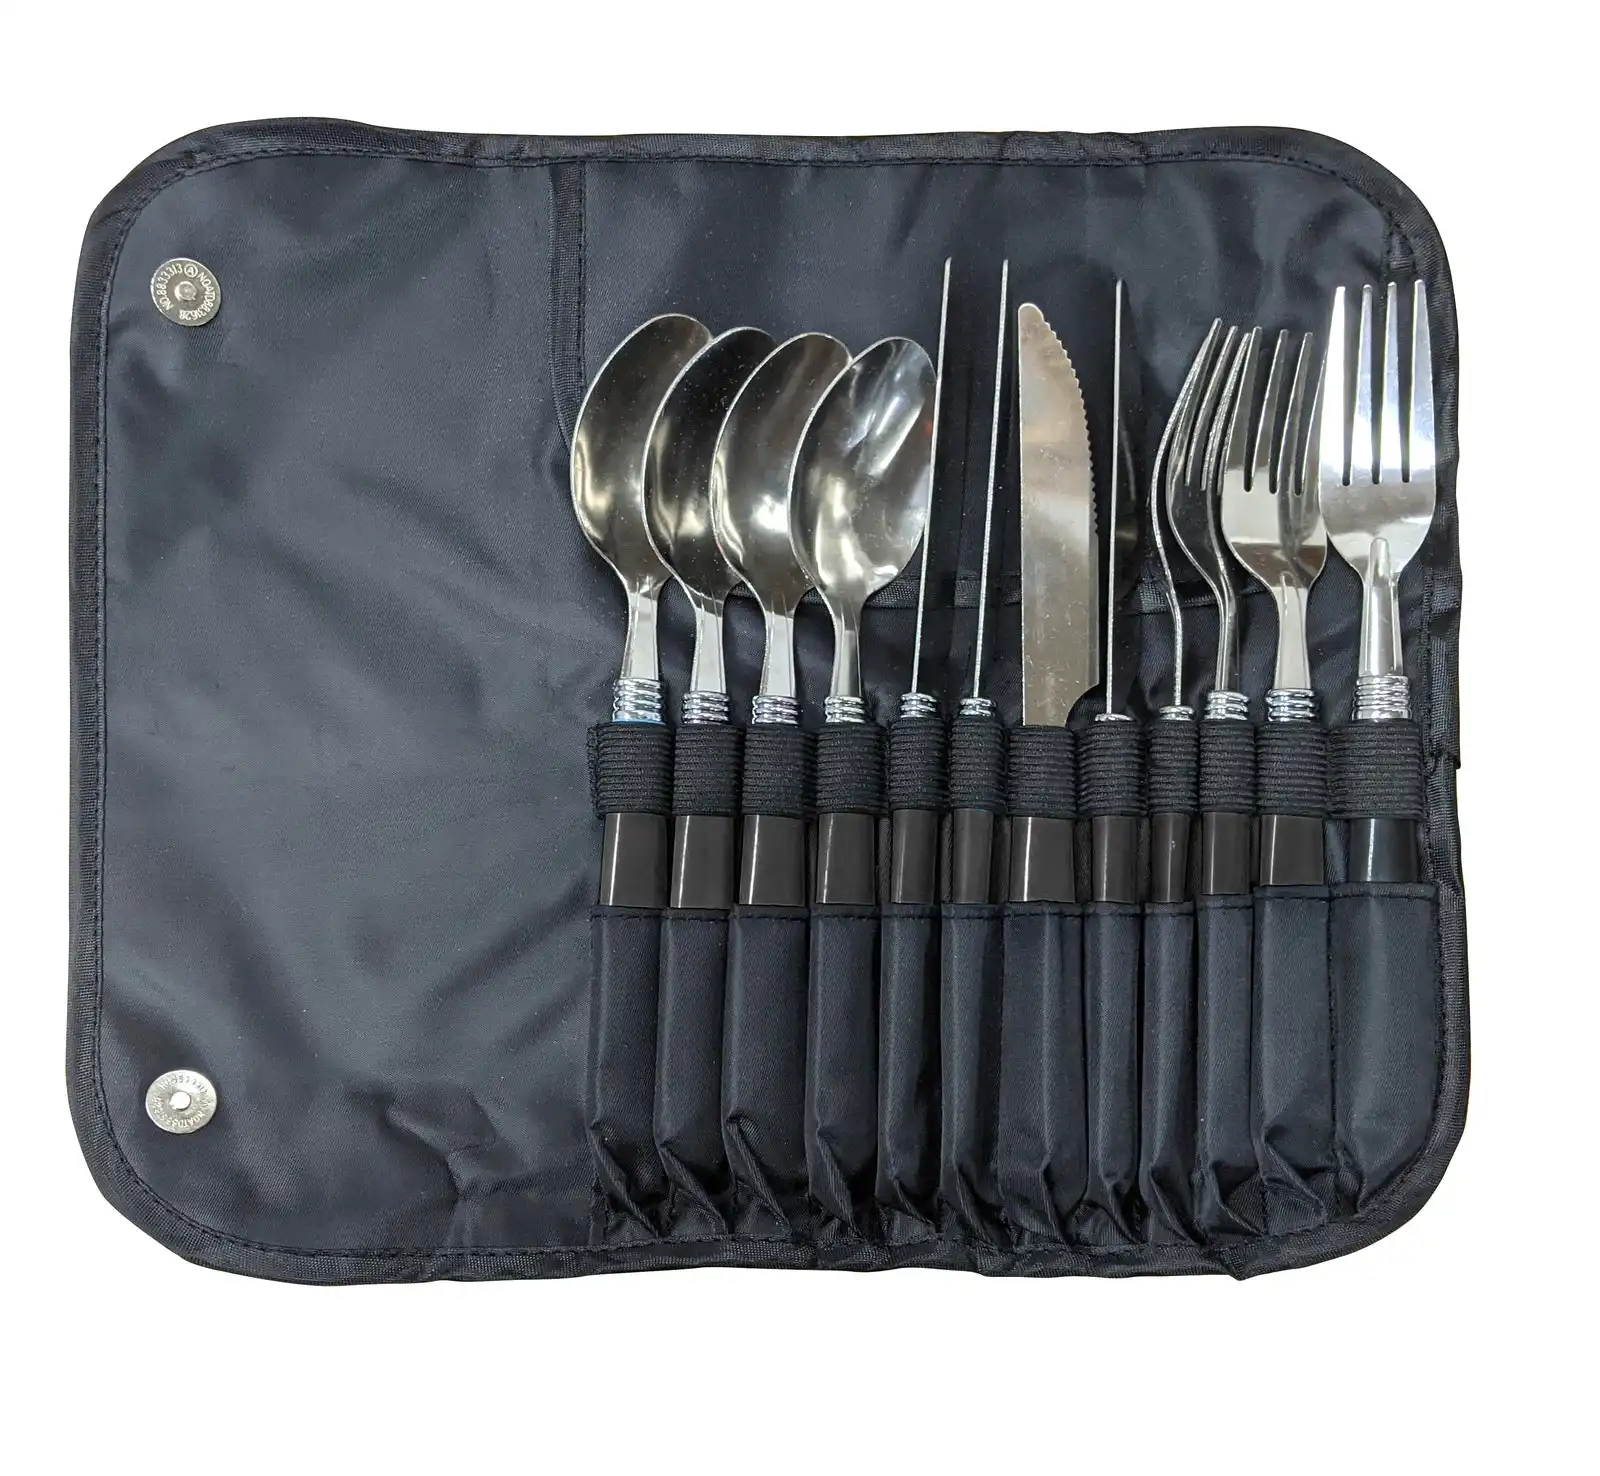 12pc Wildtrak Stainless Steel Cutlery Set Spoon/Fork/Knife w/ Roll Up Pouch